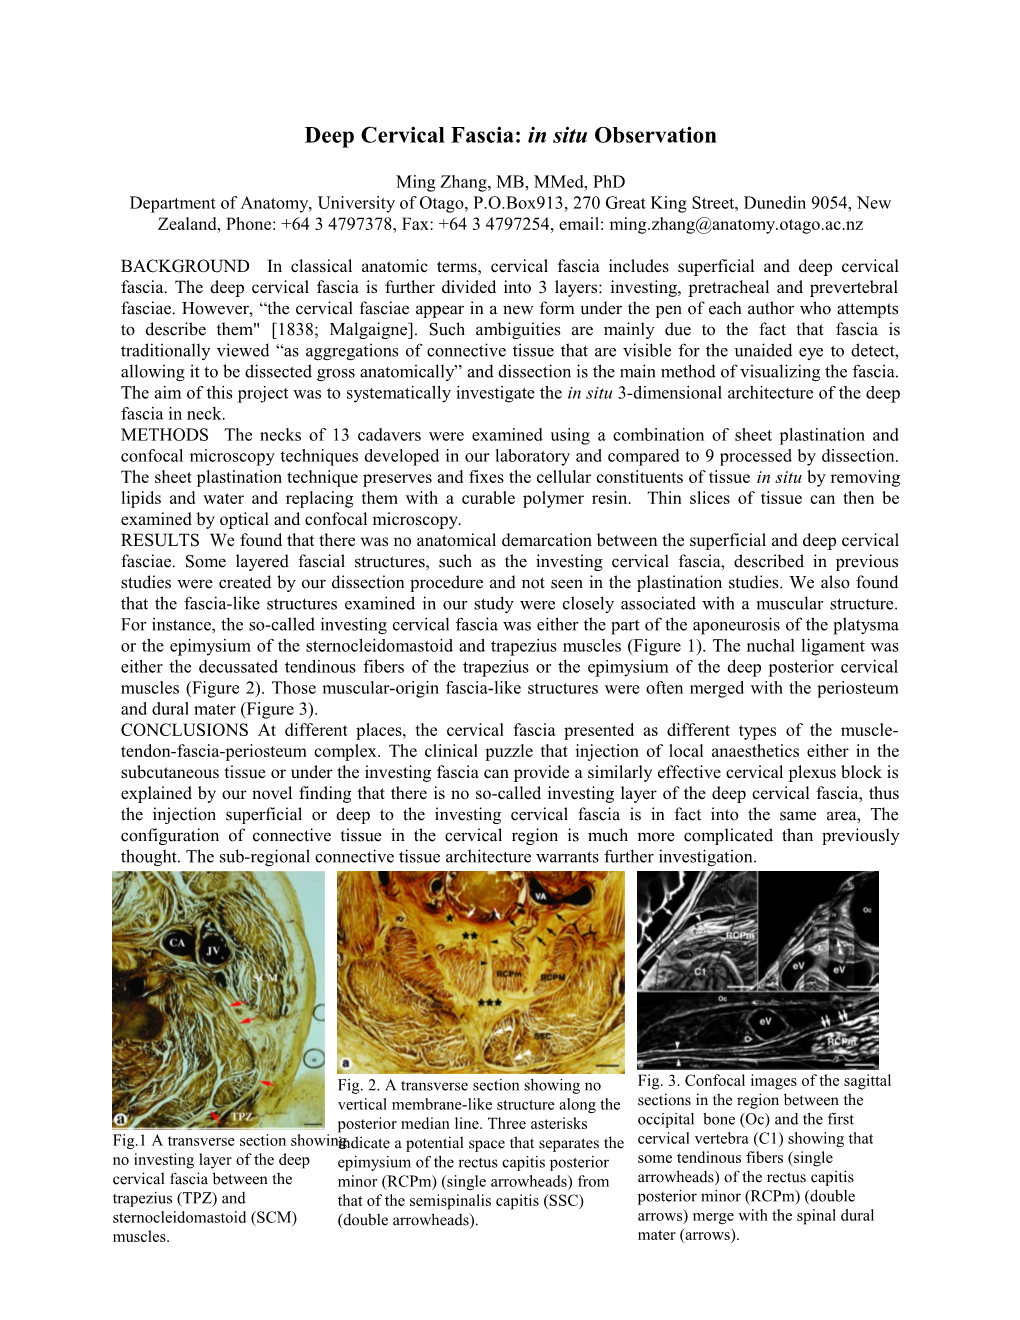 Scientific Potential of Plastination: Tissue Patterning and Sheet Plastination